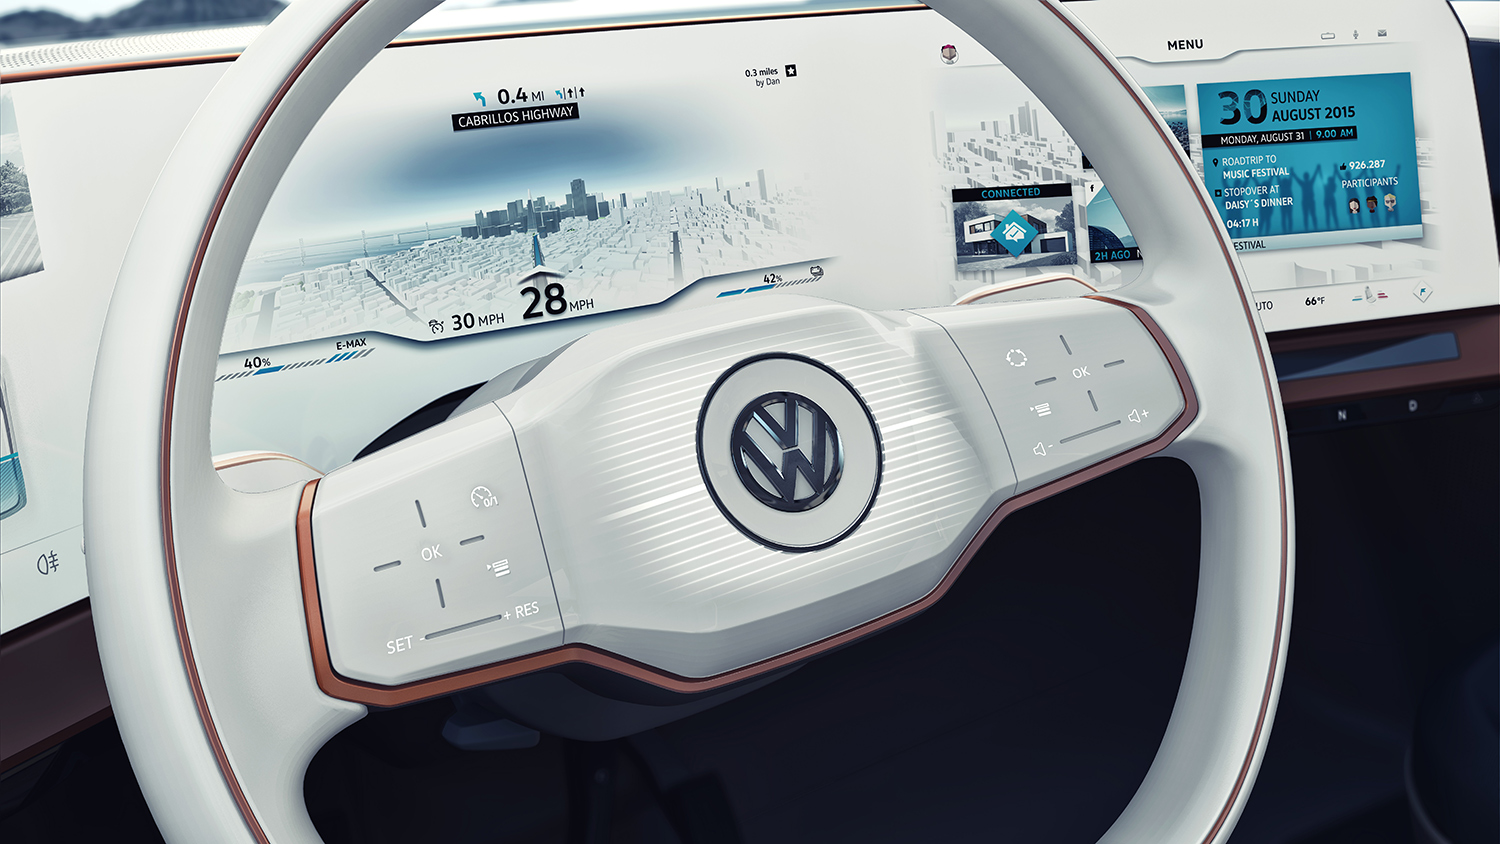 Volkswagen Budd-e concept vehicle